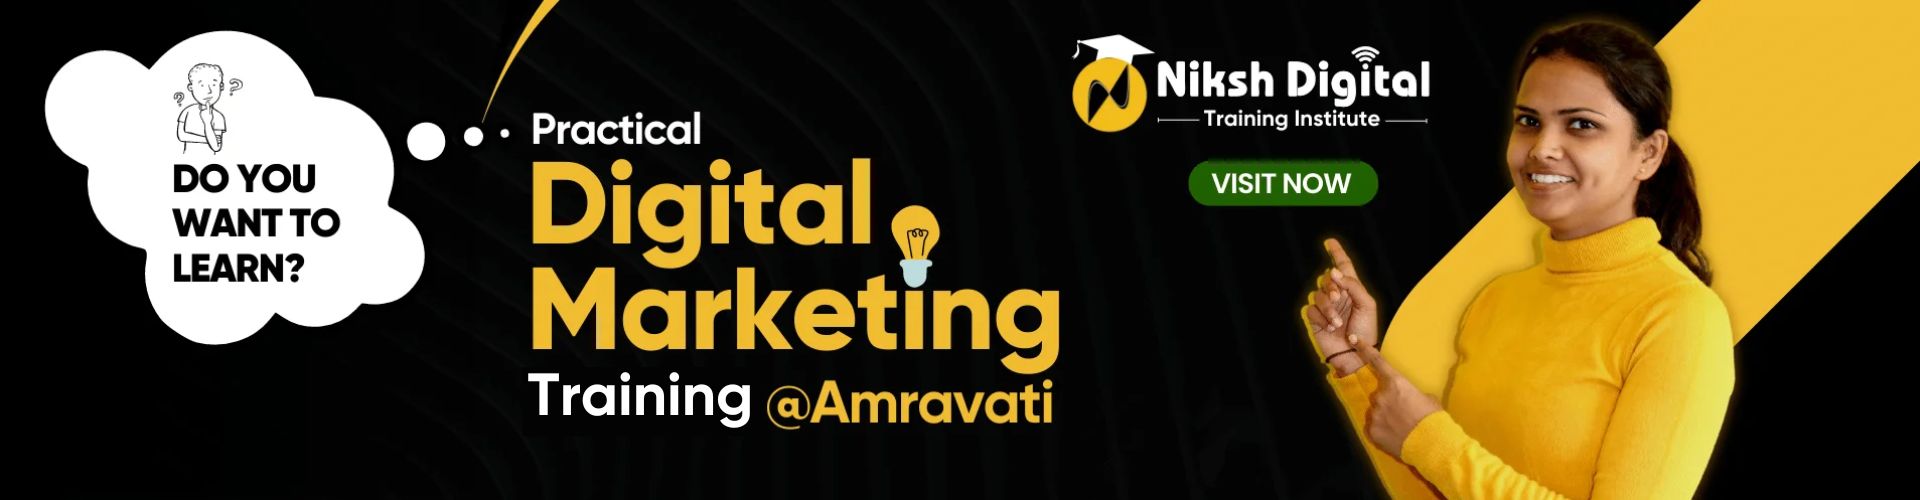 Do You Want To -Learn Practical Digital Marketing Training at Amravati